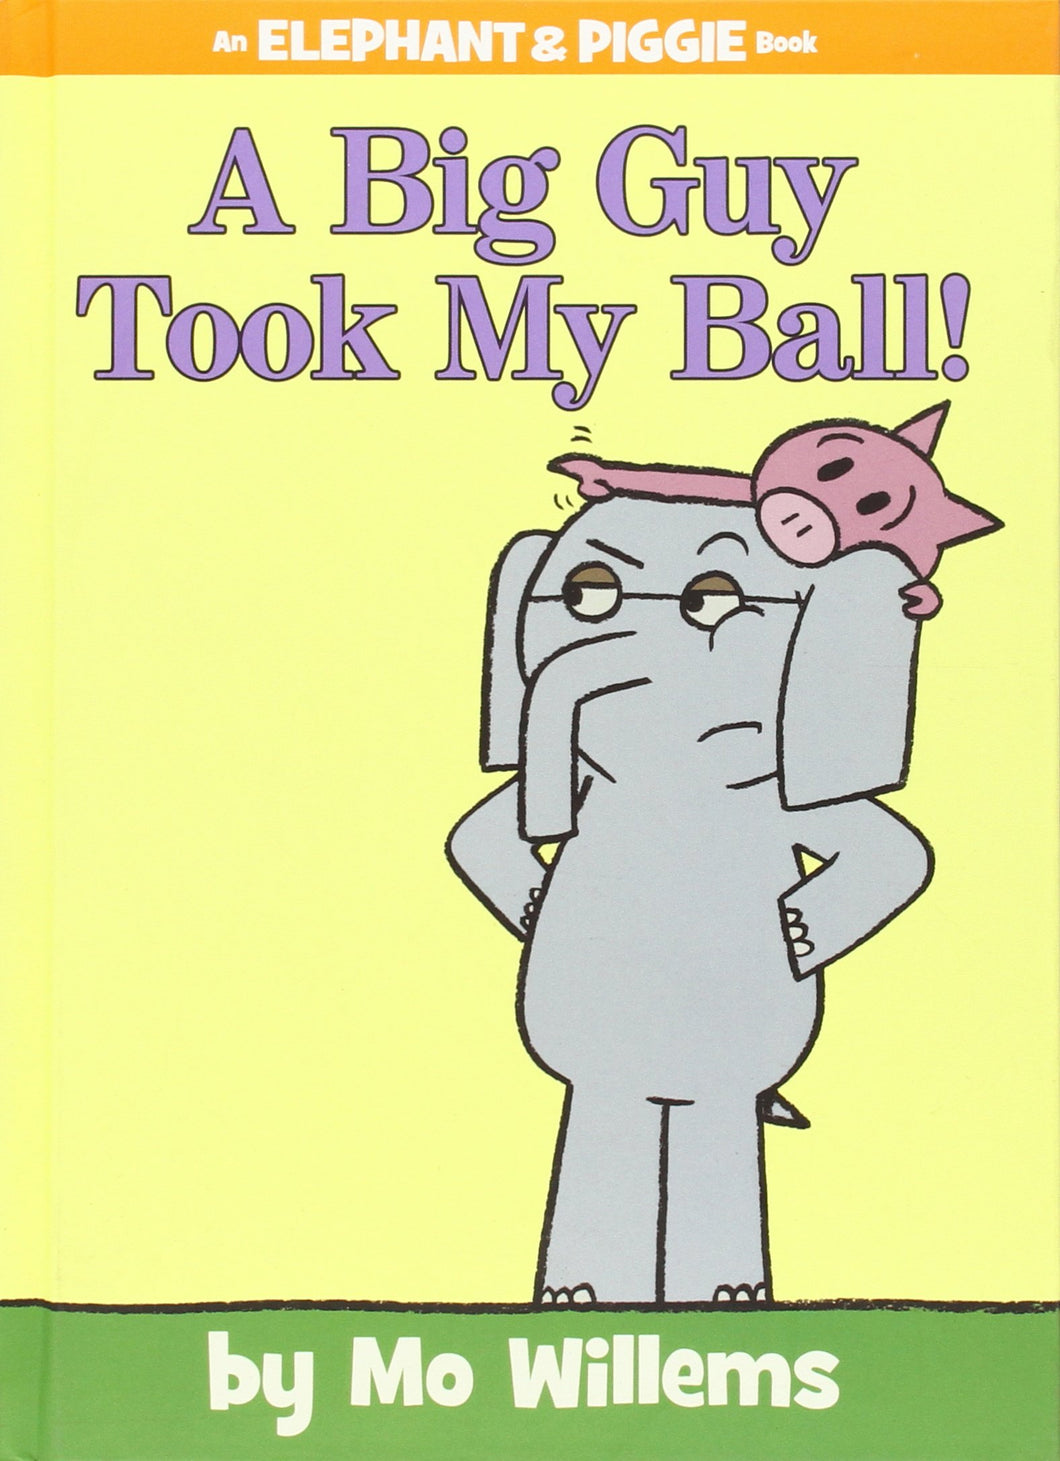 A Big Guy Took My Ball! esikidz marketplace children books preschool books 